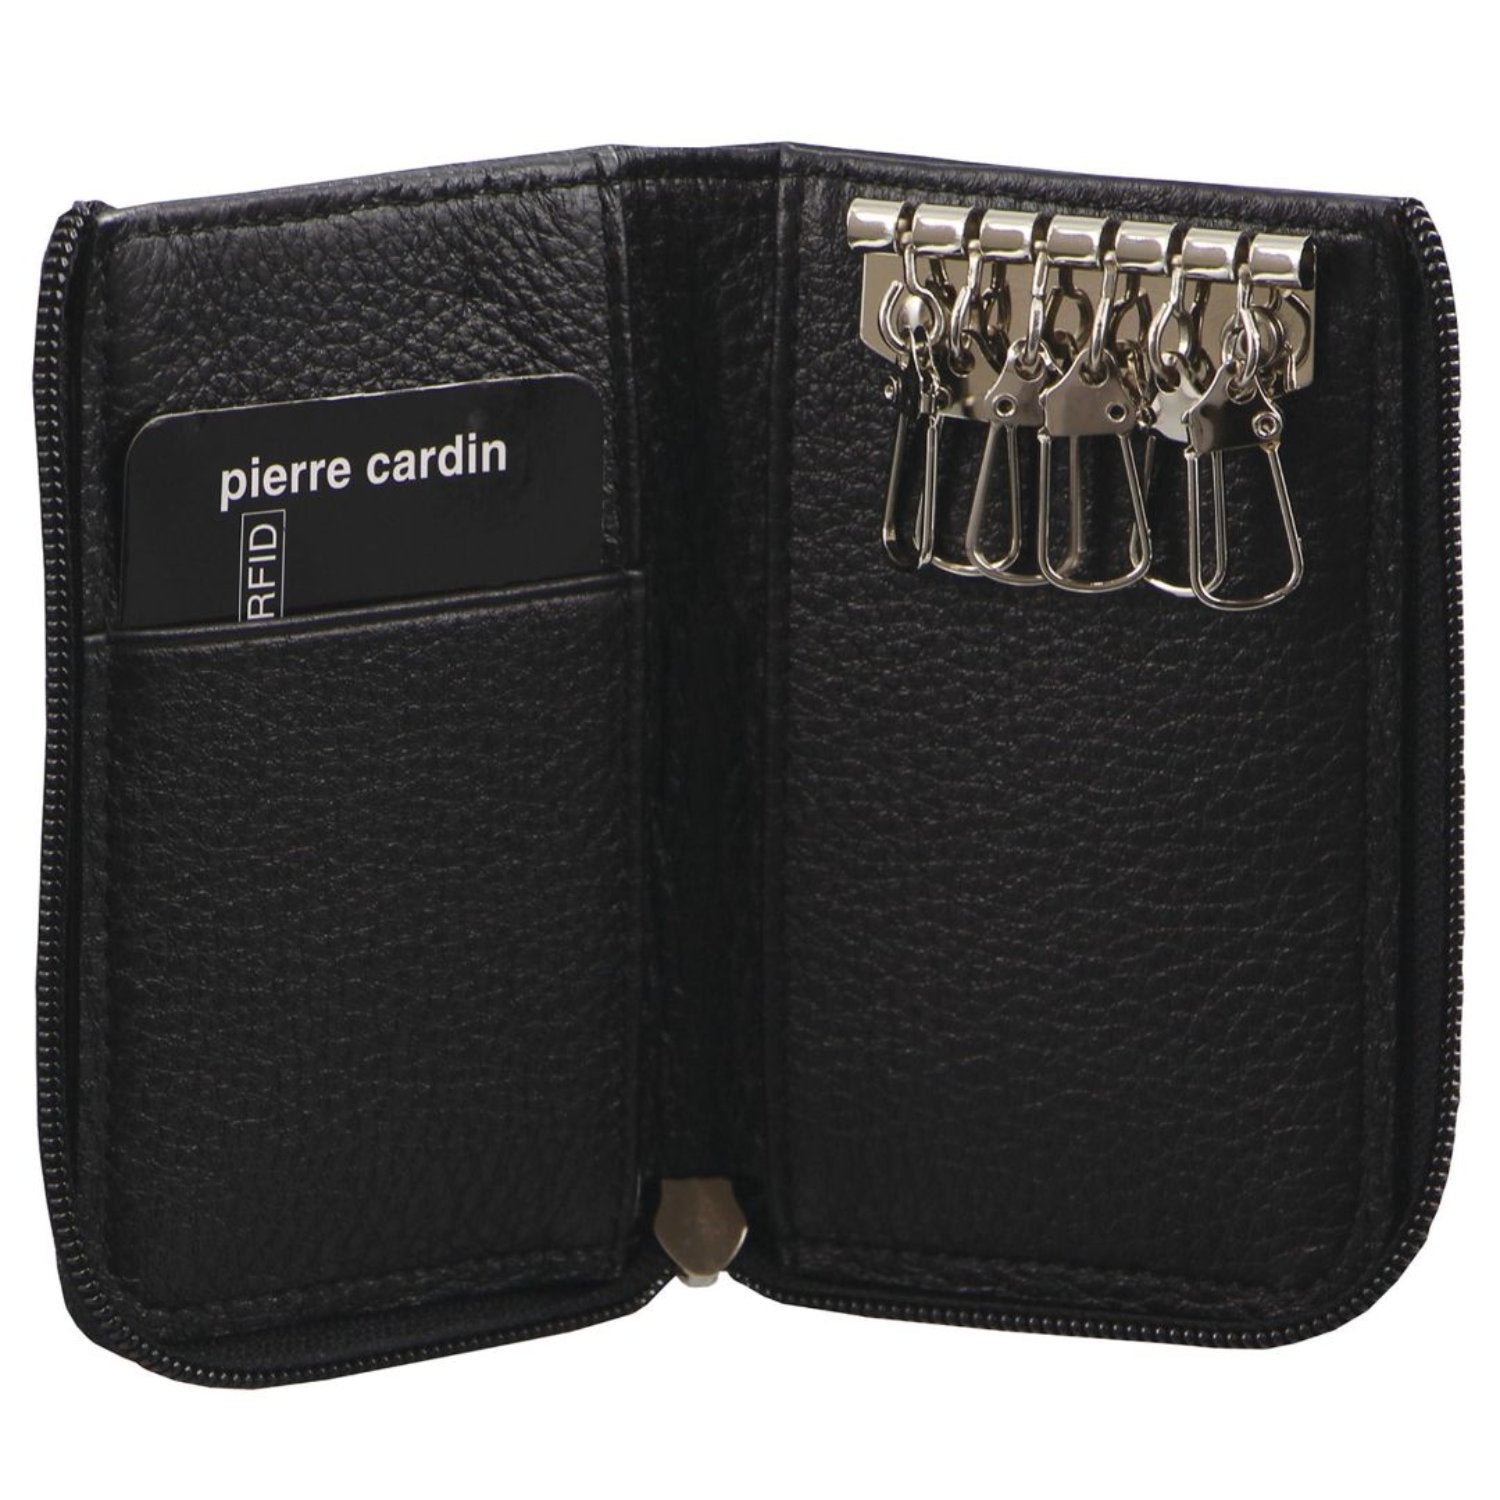 Pierre Cardin Italian Leather Key + Credit Card Holder in Black